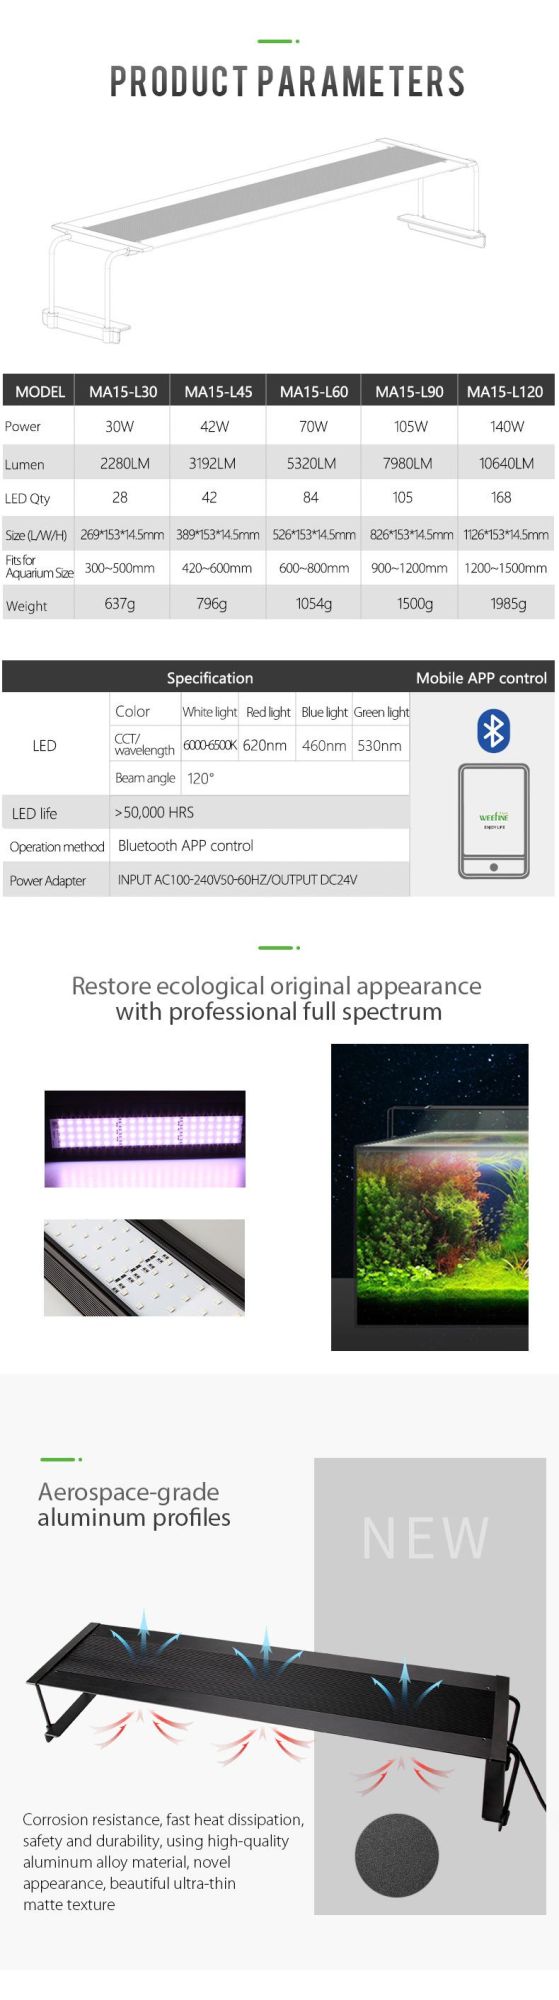 New Design LED Aquarium Light for Fish Tank with Bluetooth APP Control (MA15)